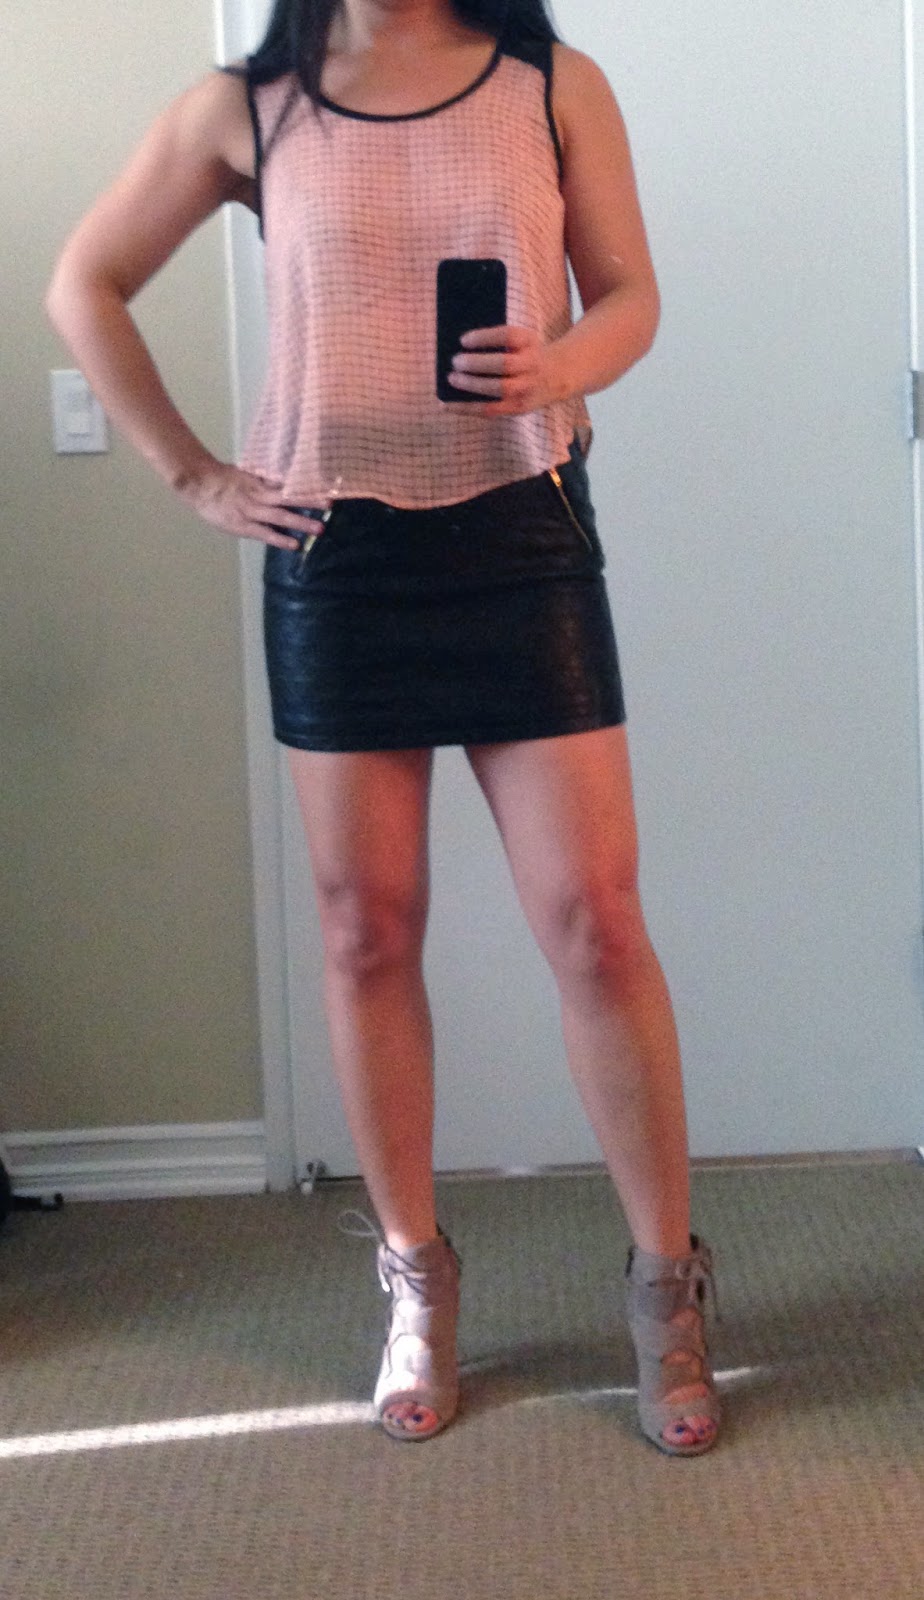 tried to mimic the leather skirt look... Buahahaha....